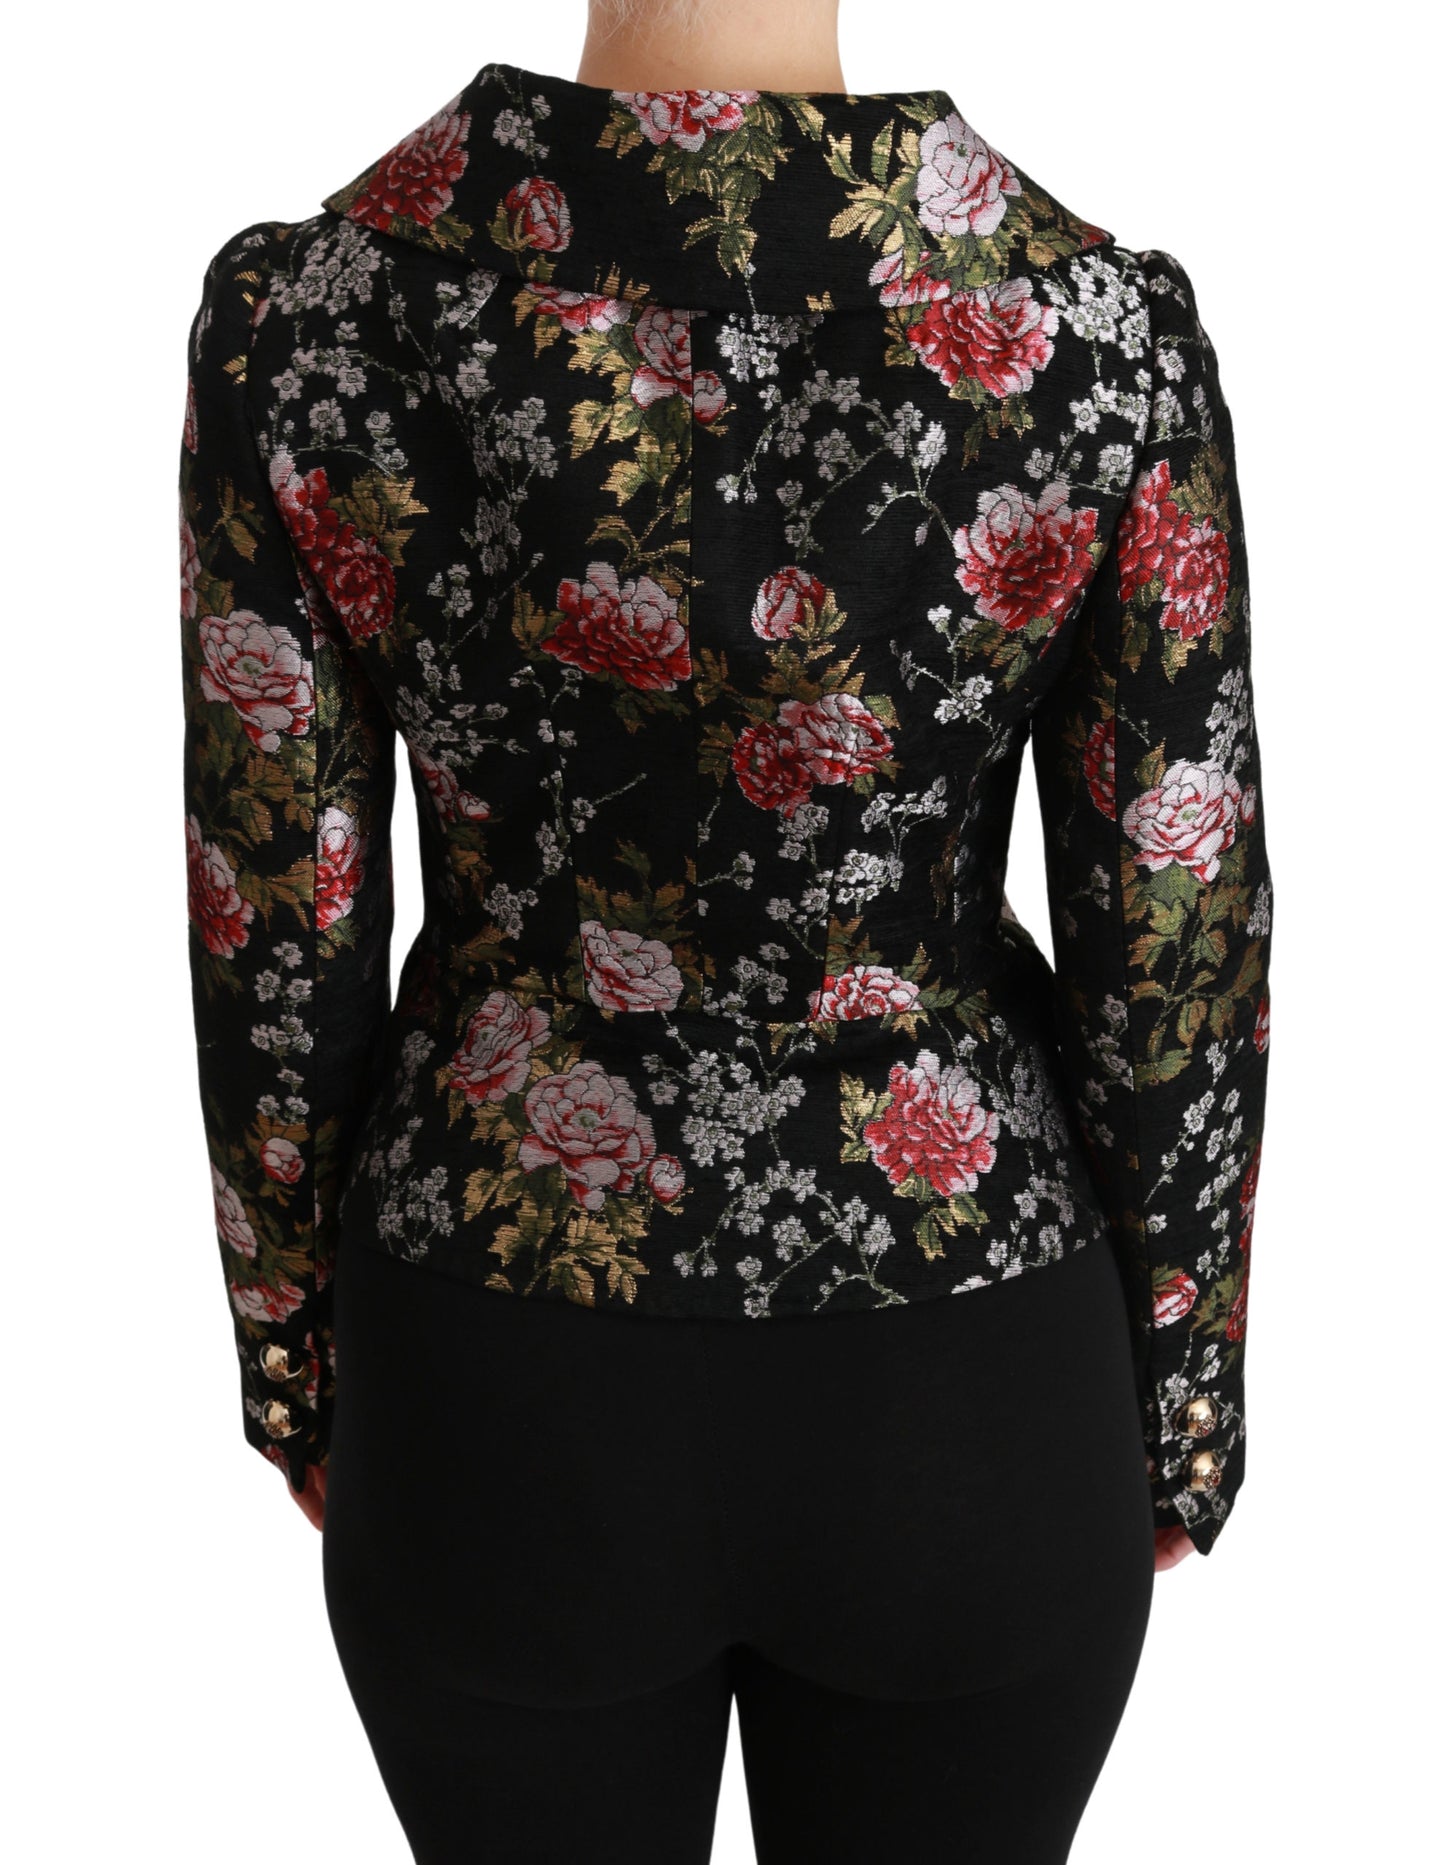 Black Floral Brocade Coat Blazer Jacket